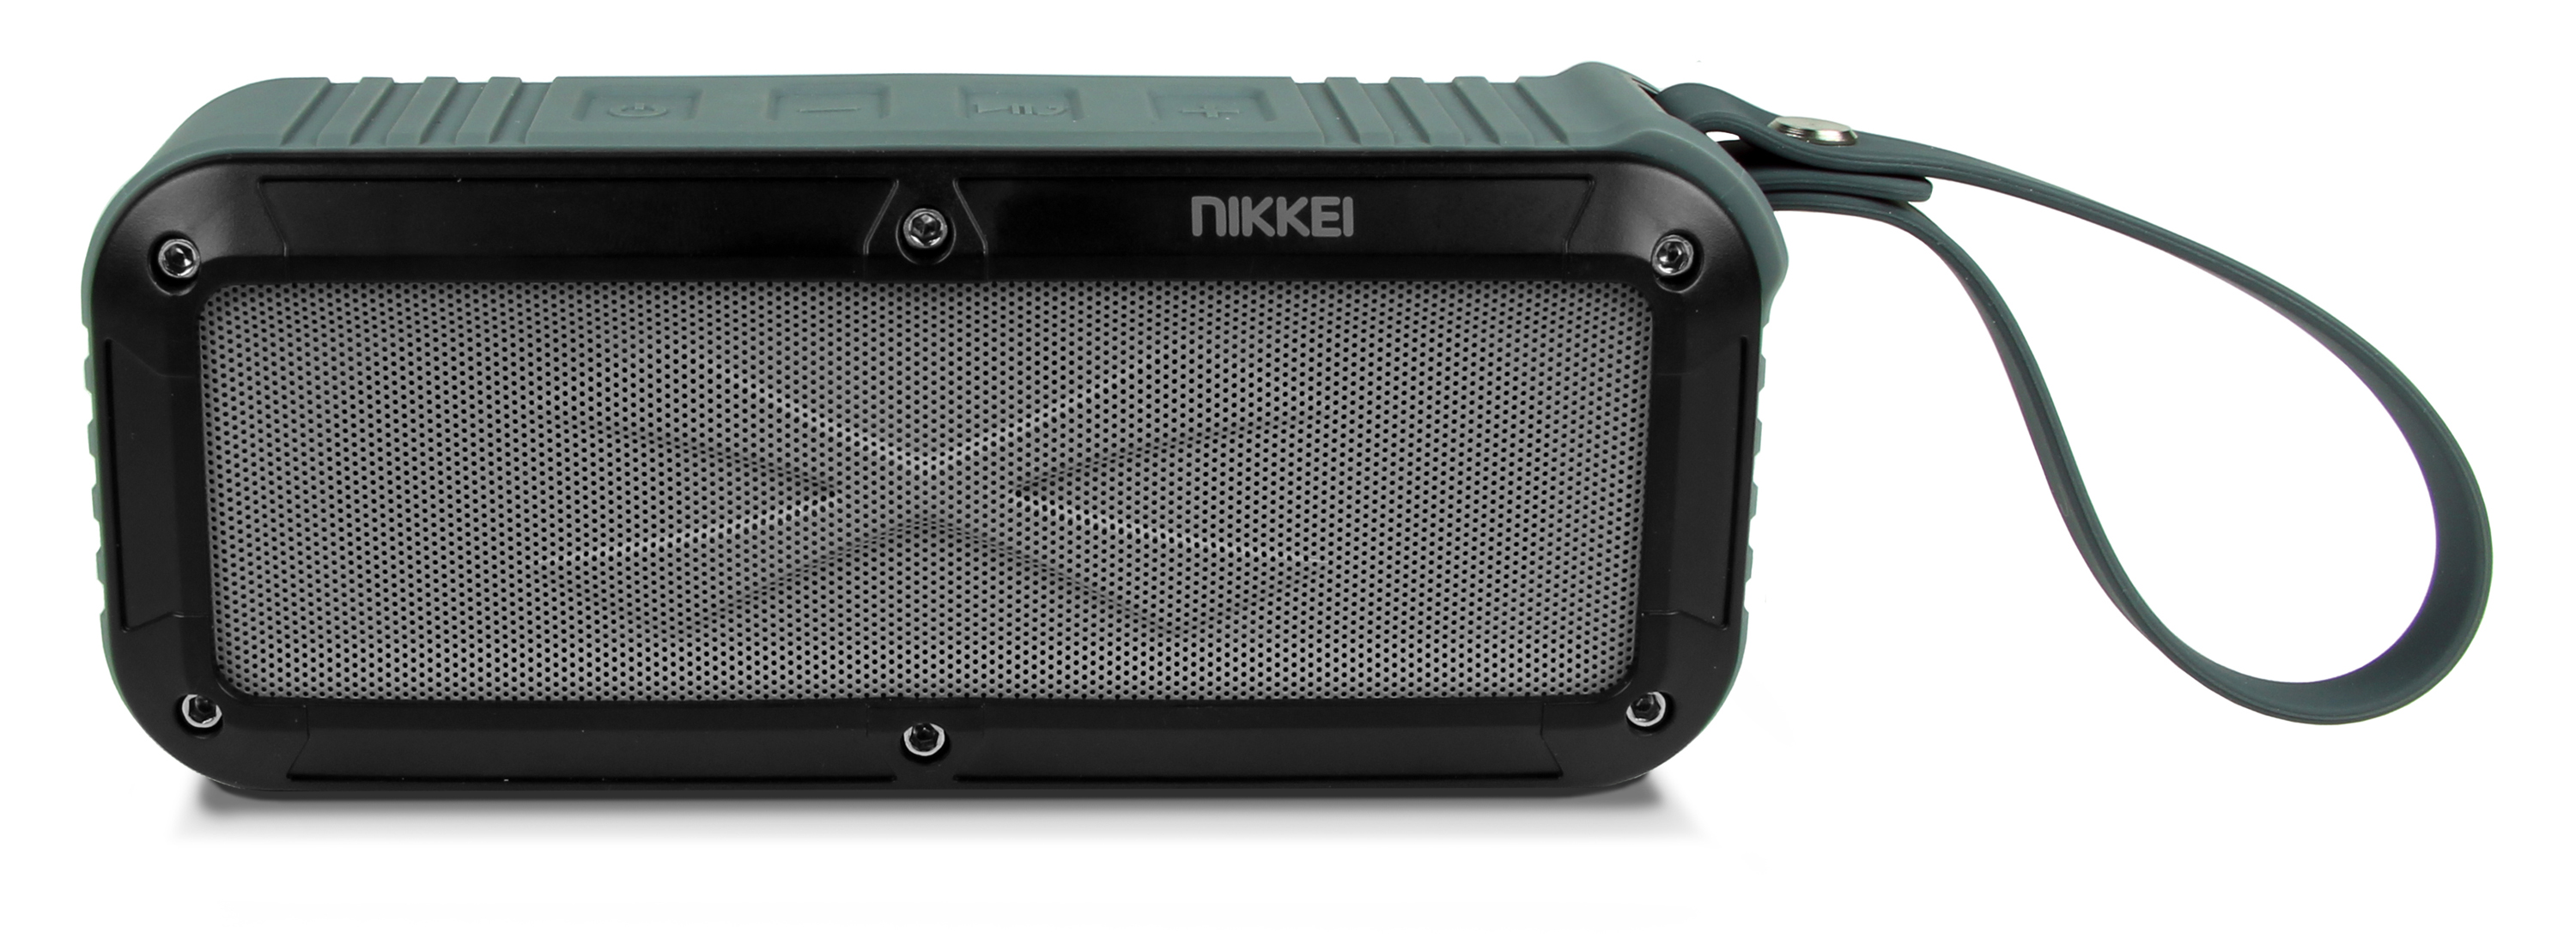 Nikkei BOXX3GY Waterproof BT Speaker  2x3W gris